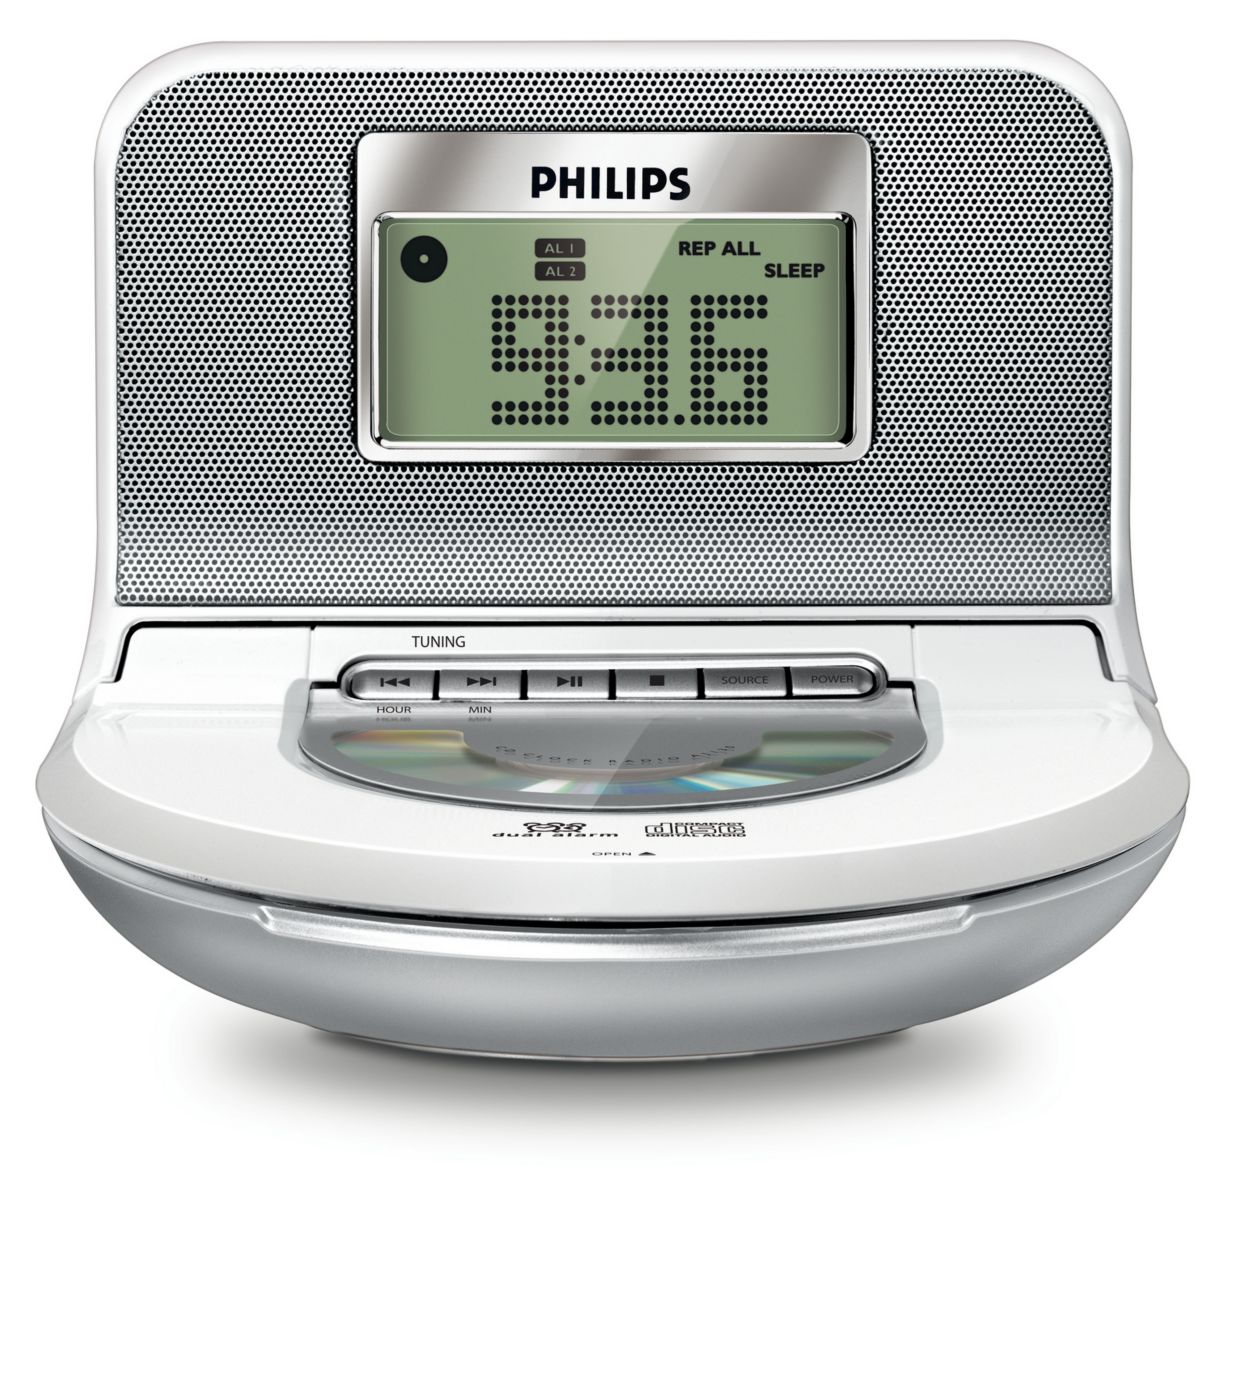 Clock AJ130/37 | Philips